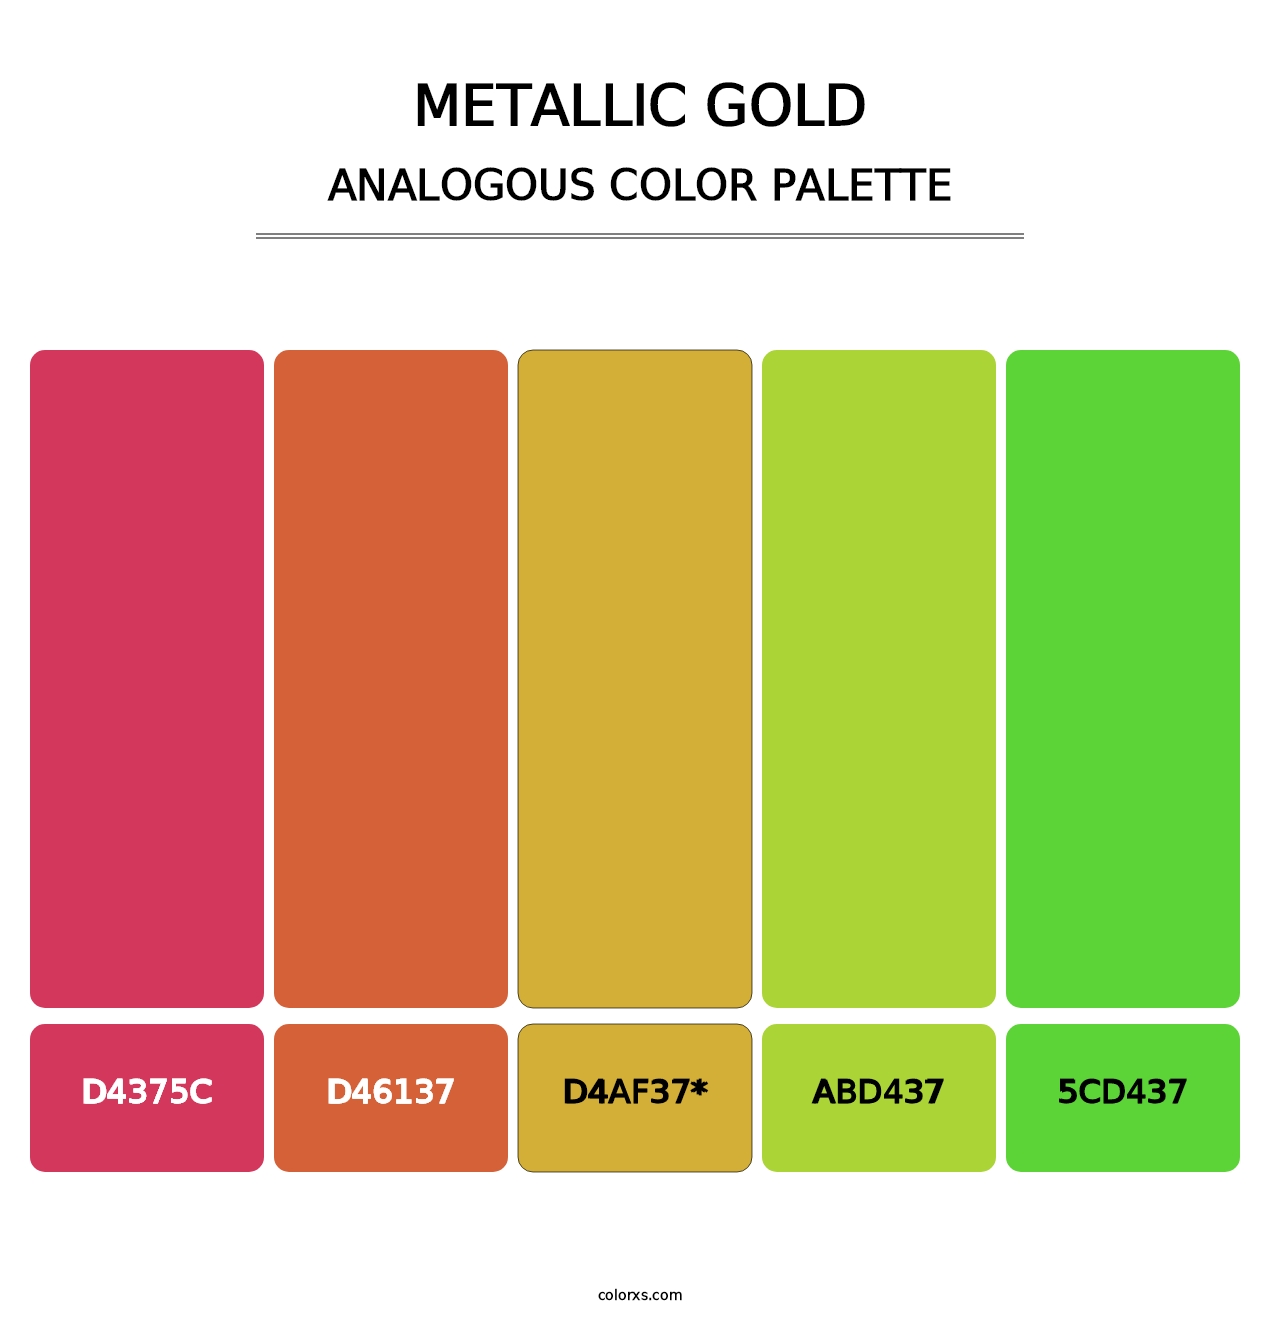 Metallic Gold - Analogous Color Palette